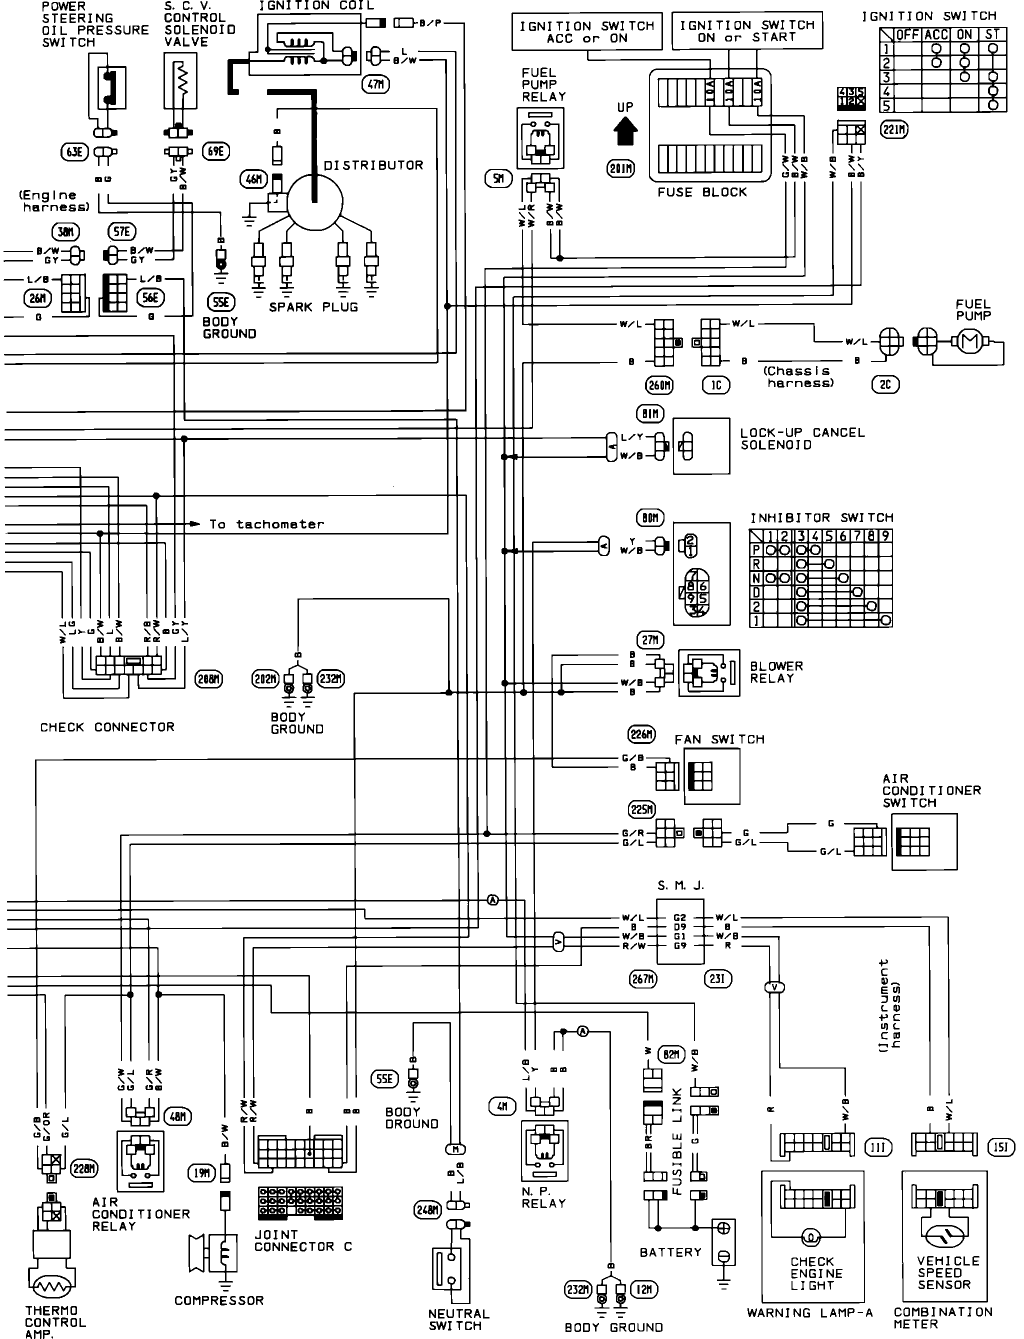 Nissan Hardbody Alternator Wiring Diagram